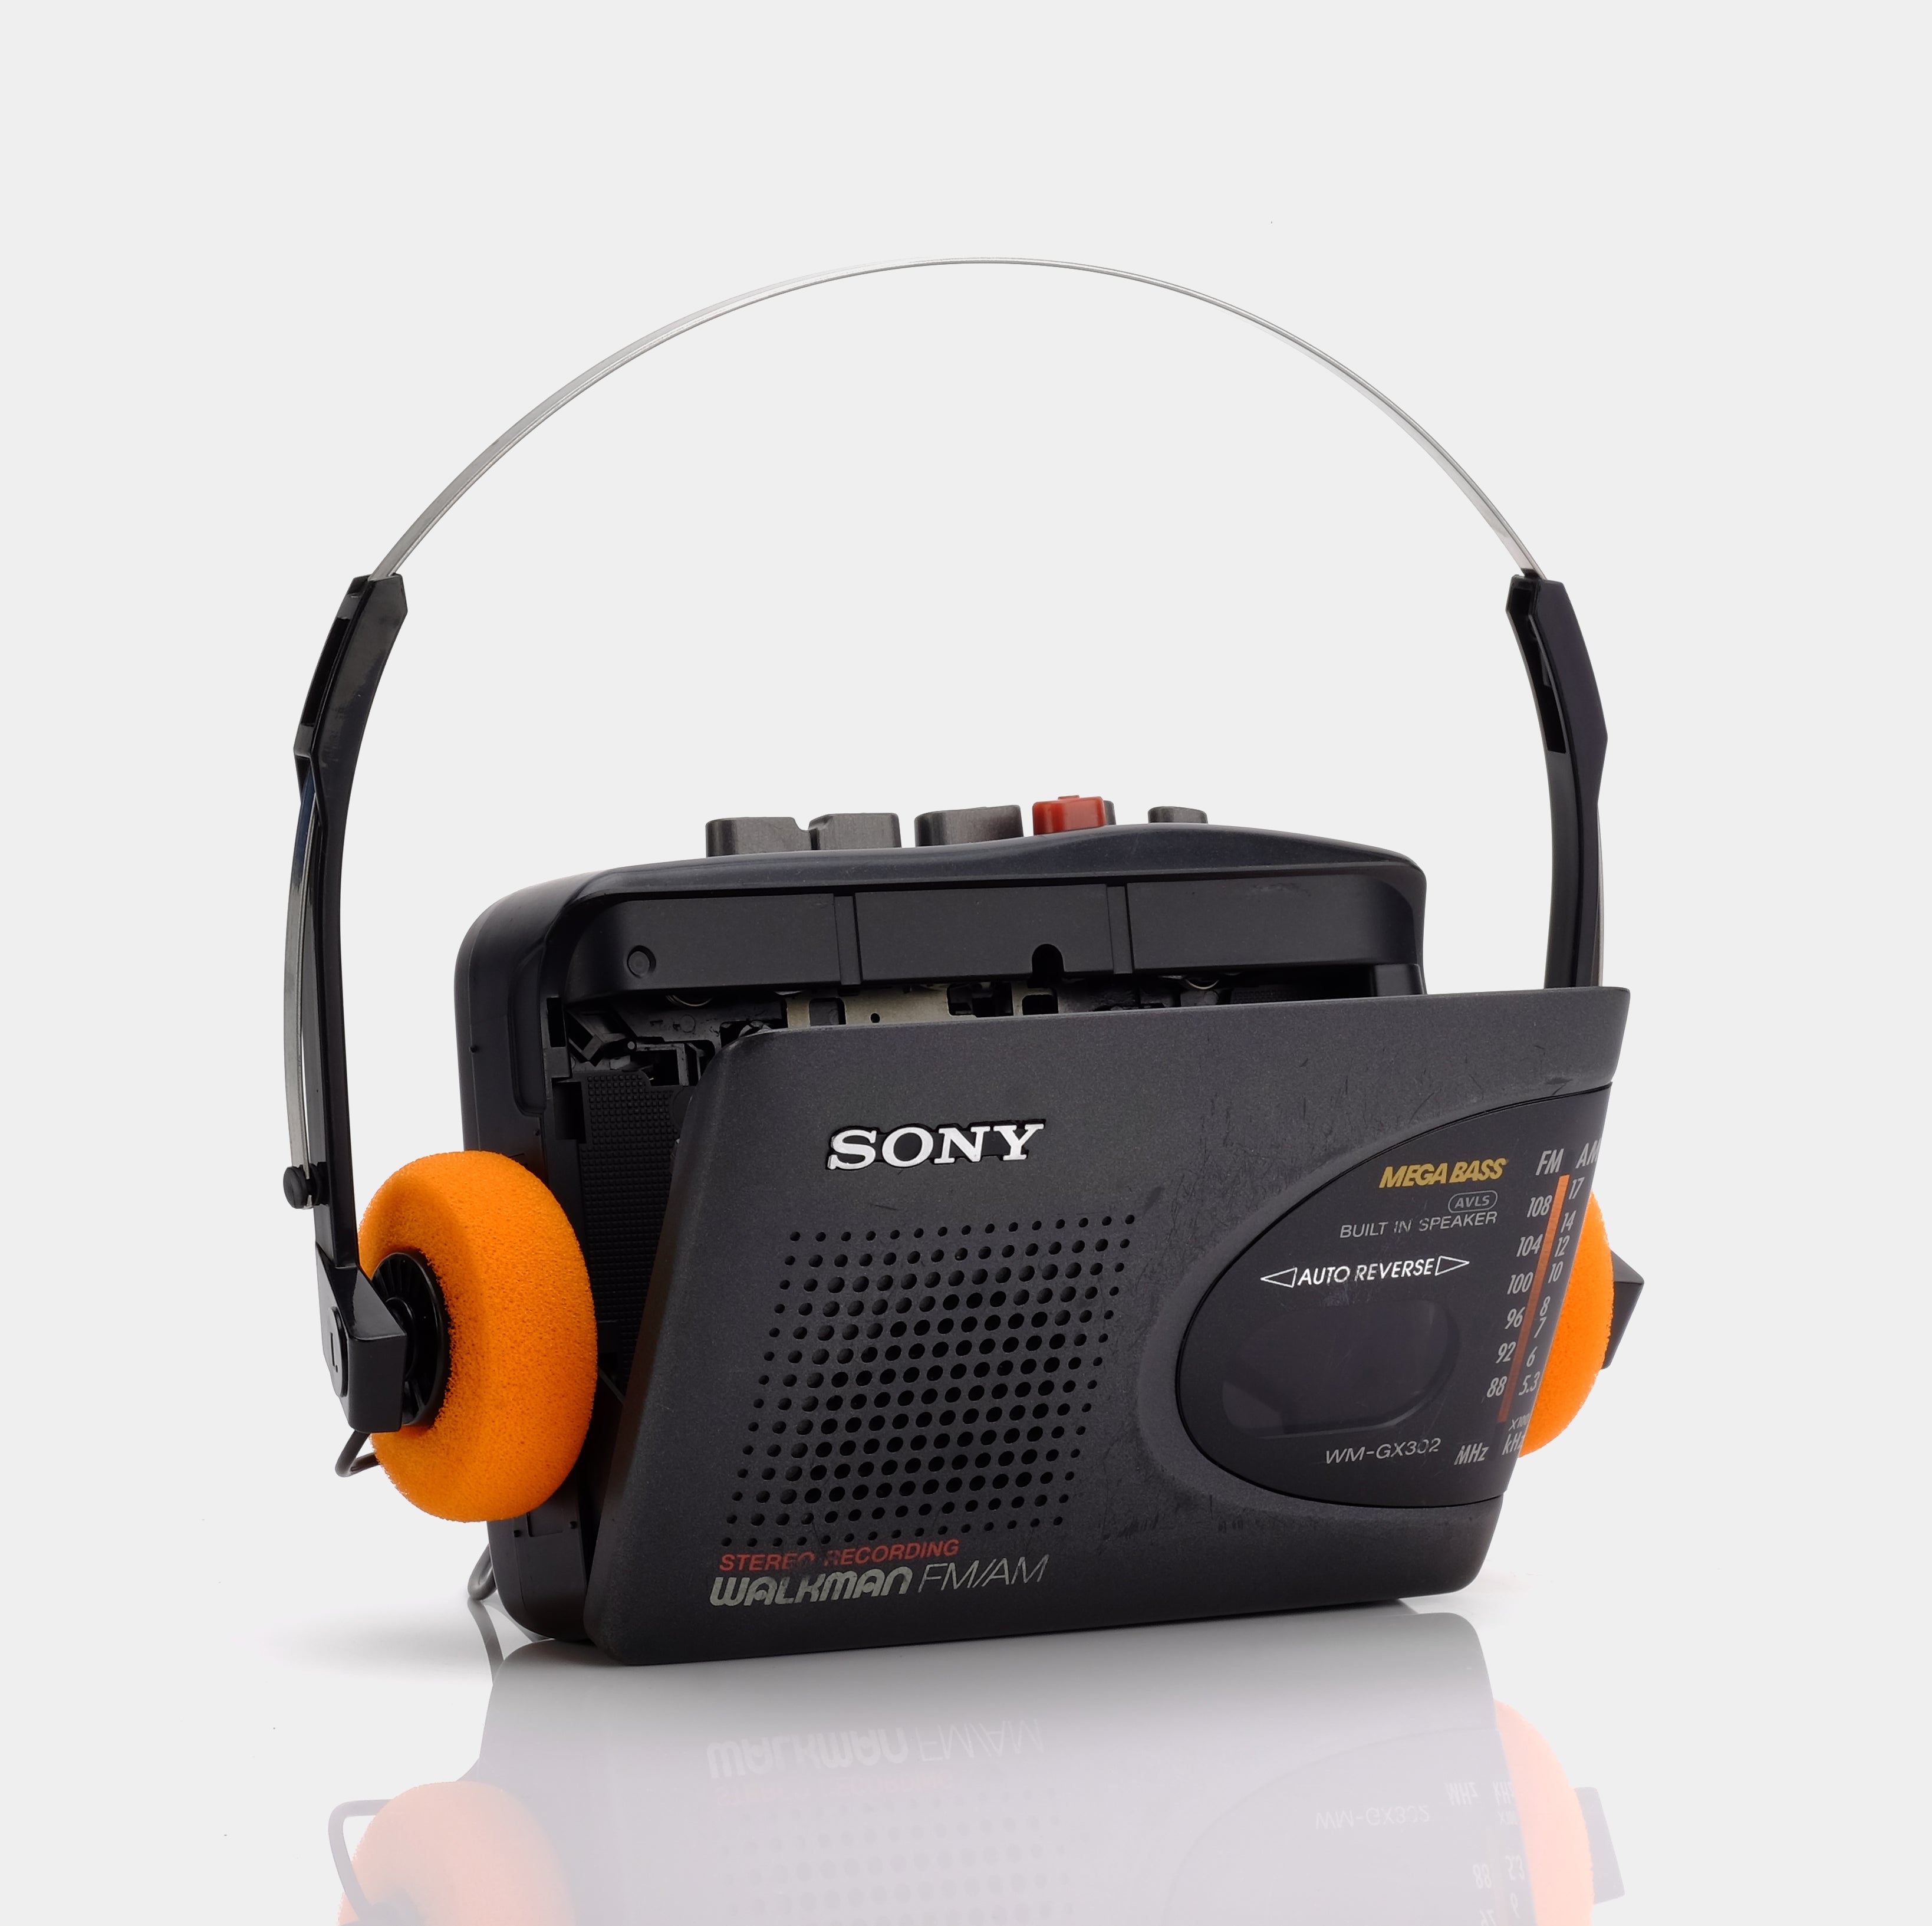 Sony Walkman WM-GX302 Portable Cassette Player/Recorder